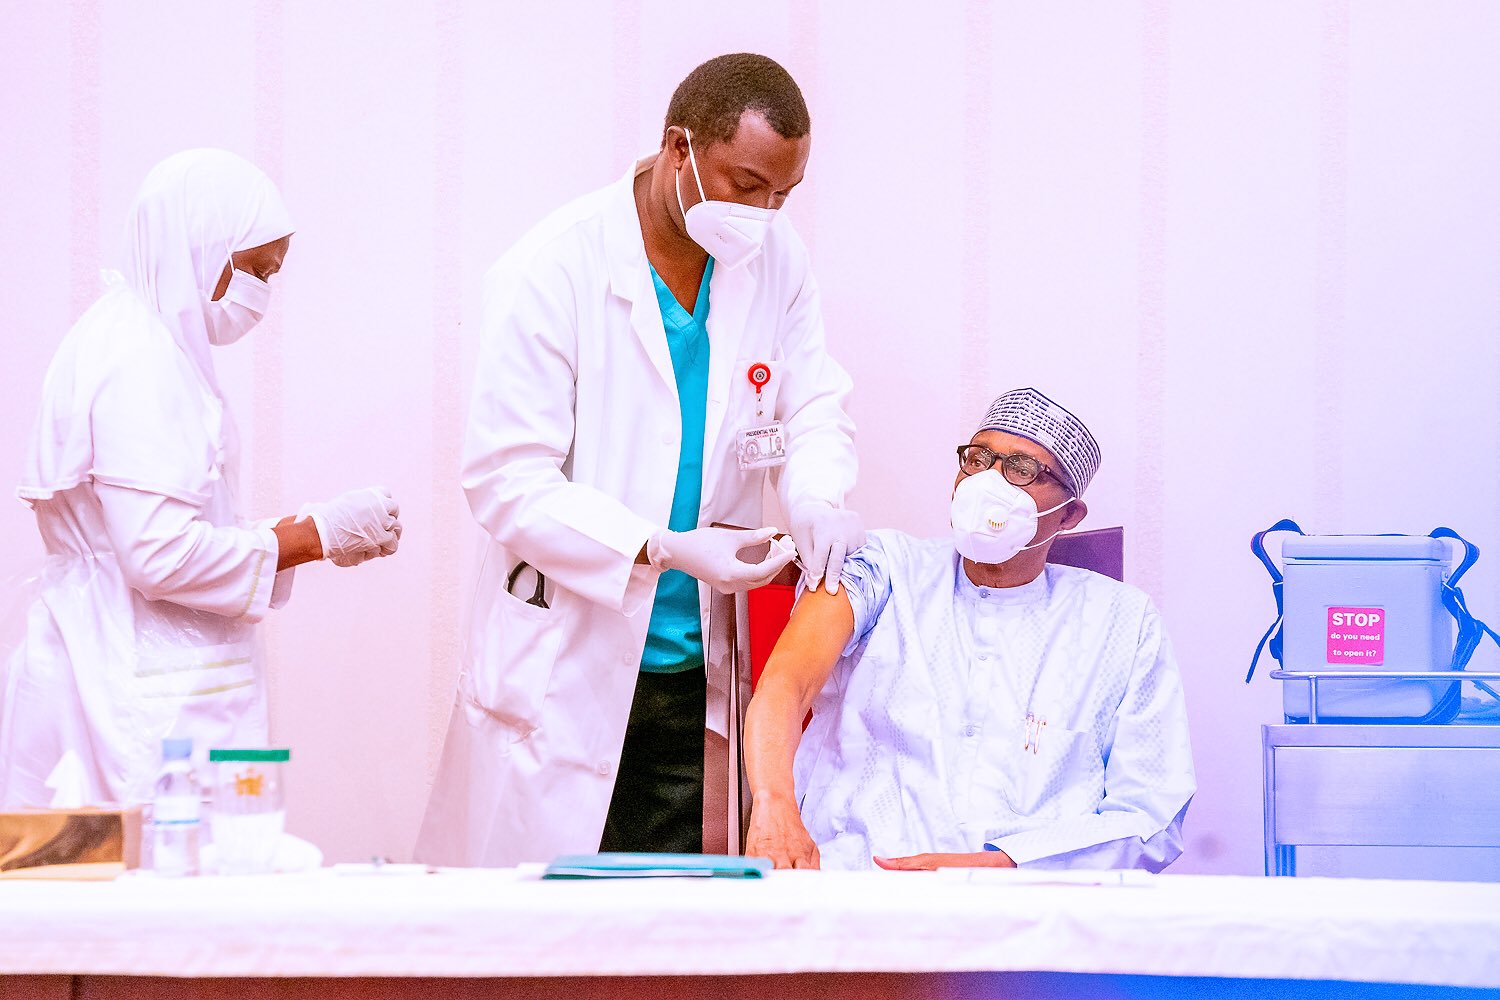 Le président nigérian Muhammadu Buhari reçoit une dose de vaccin COVID-19 à Abuja, au Nigeria.